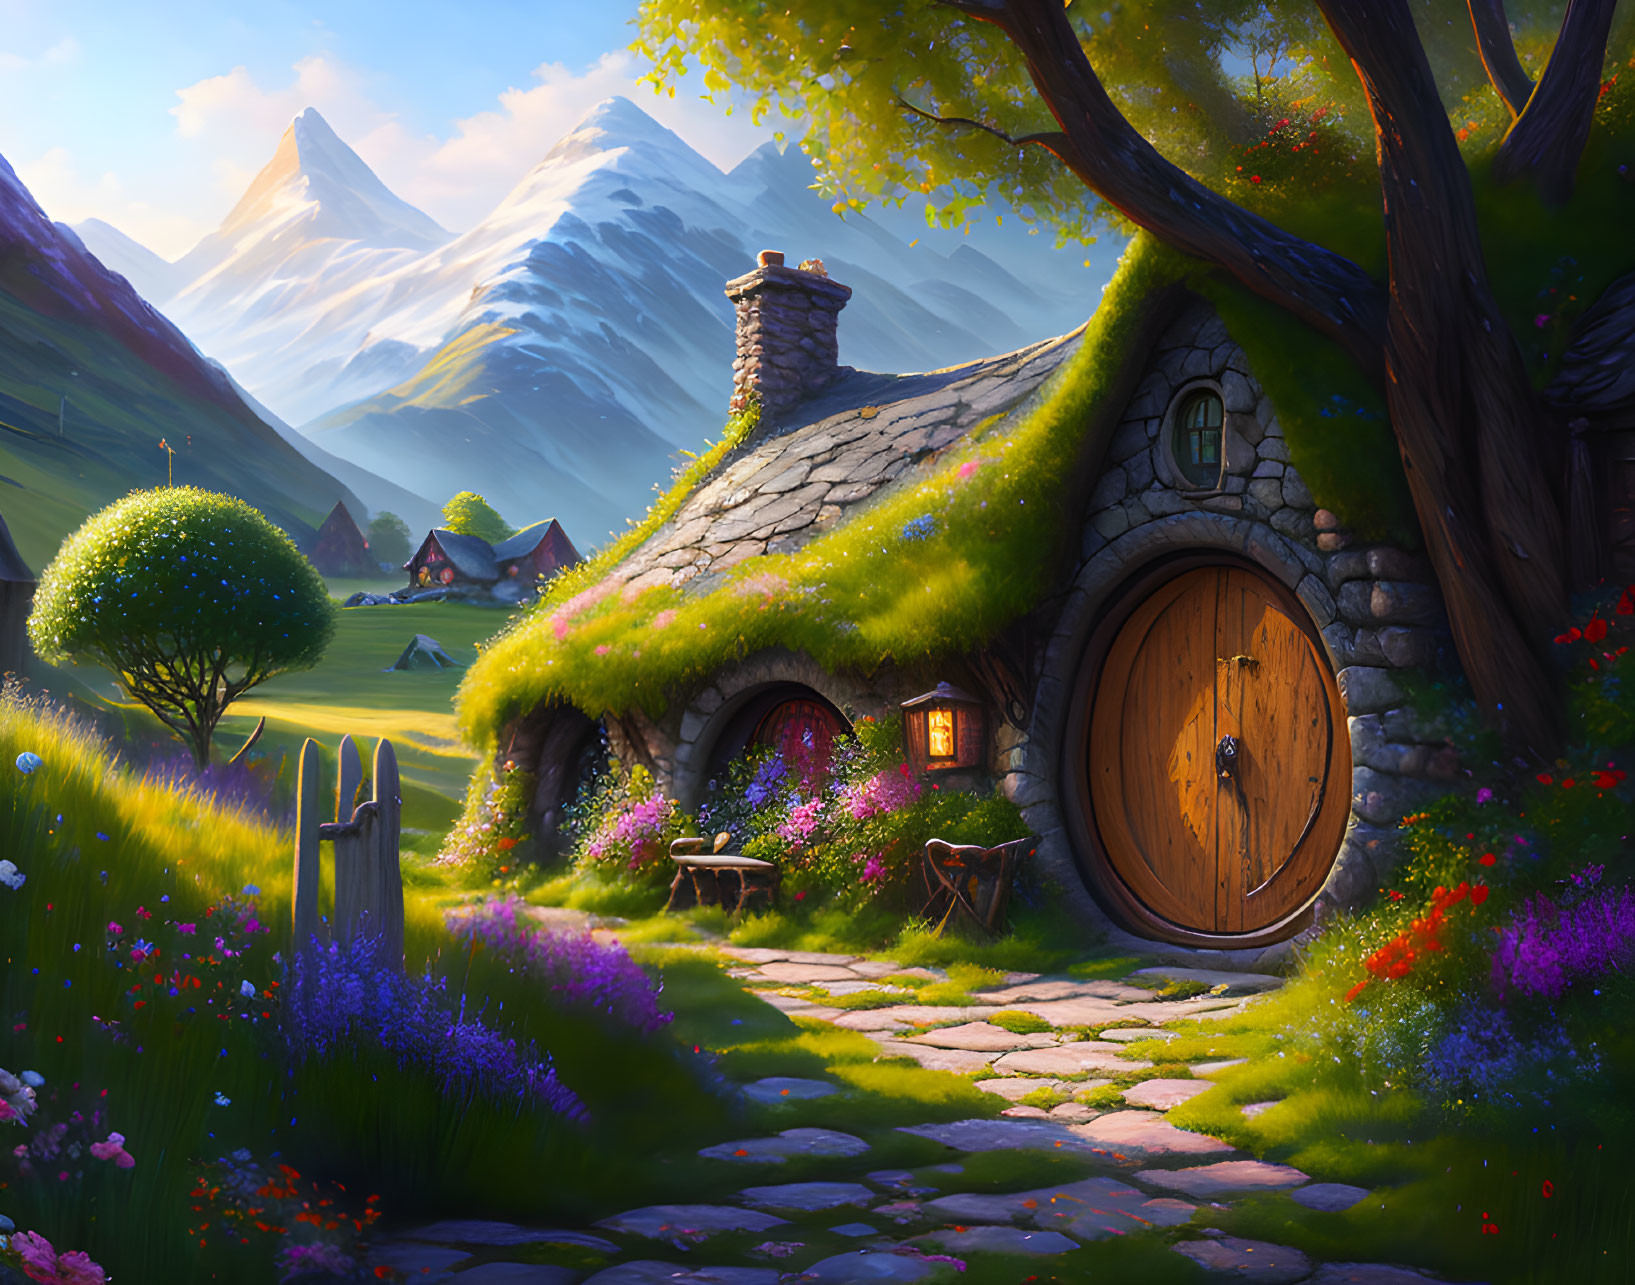 Hobbit's house at Shire